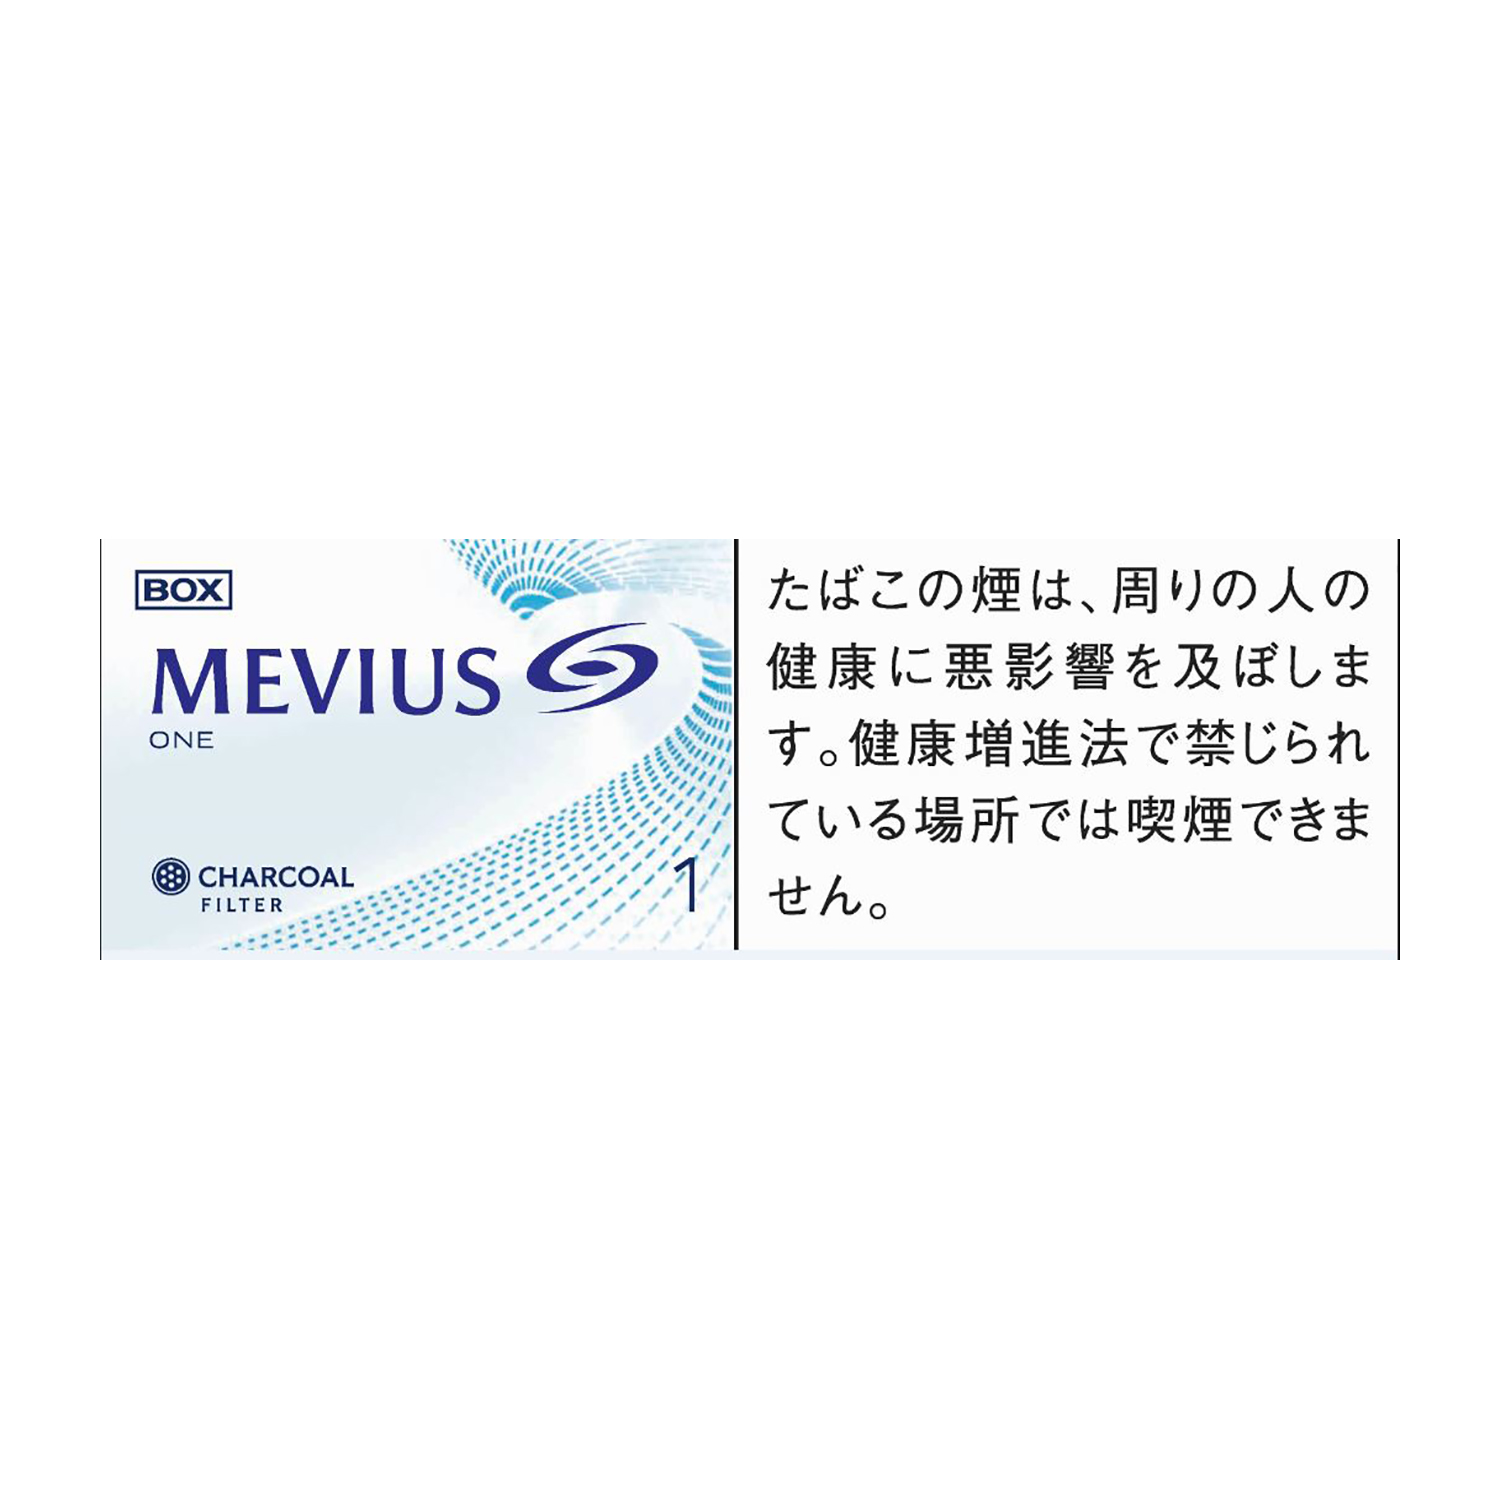 MEVIUS ONE KS BOX / Tar:1mg Nicotine:0.1mg